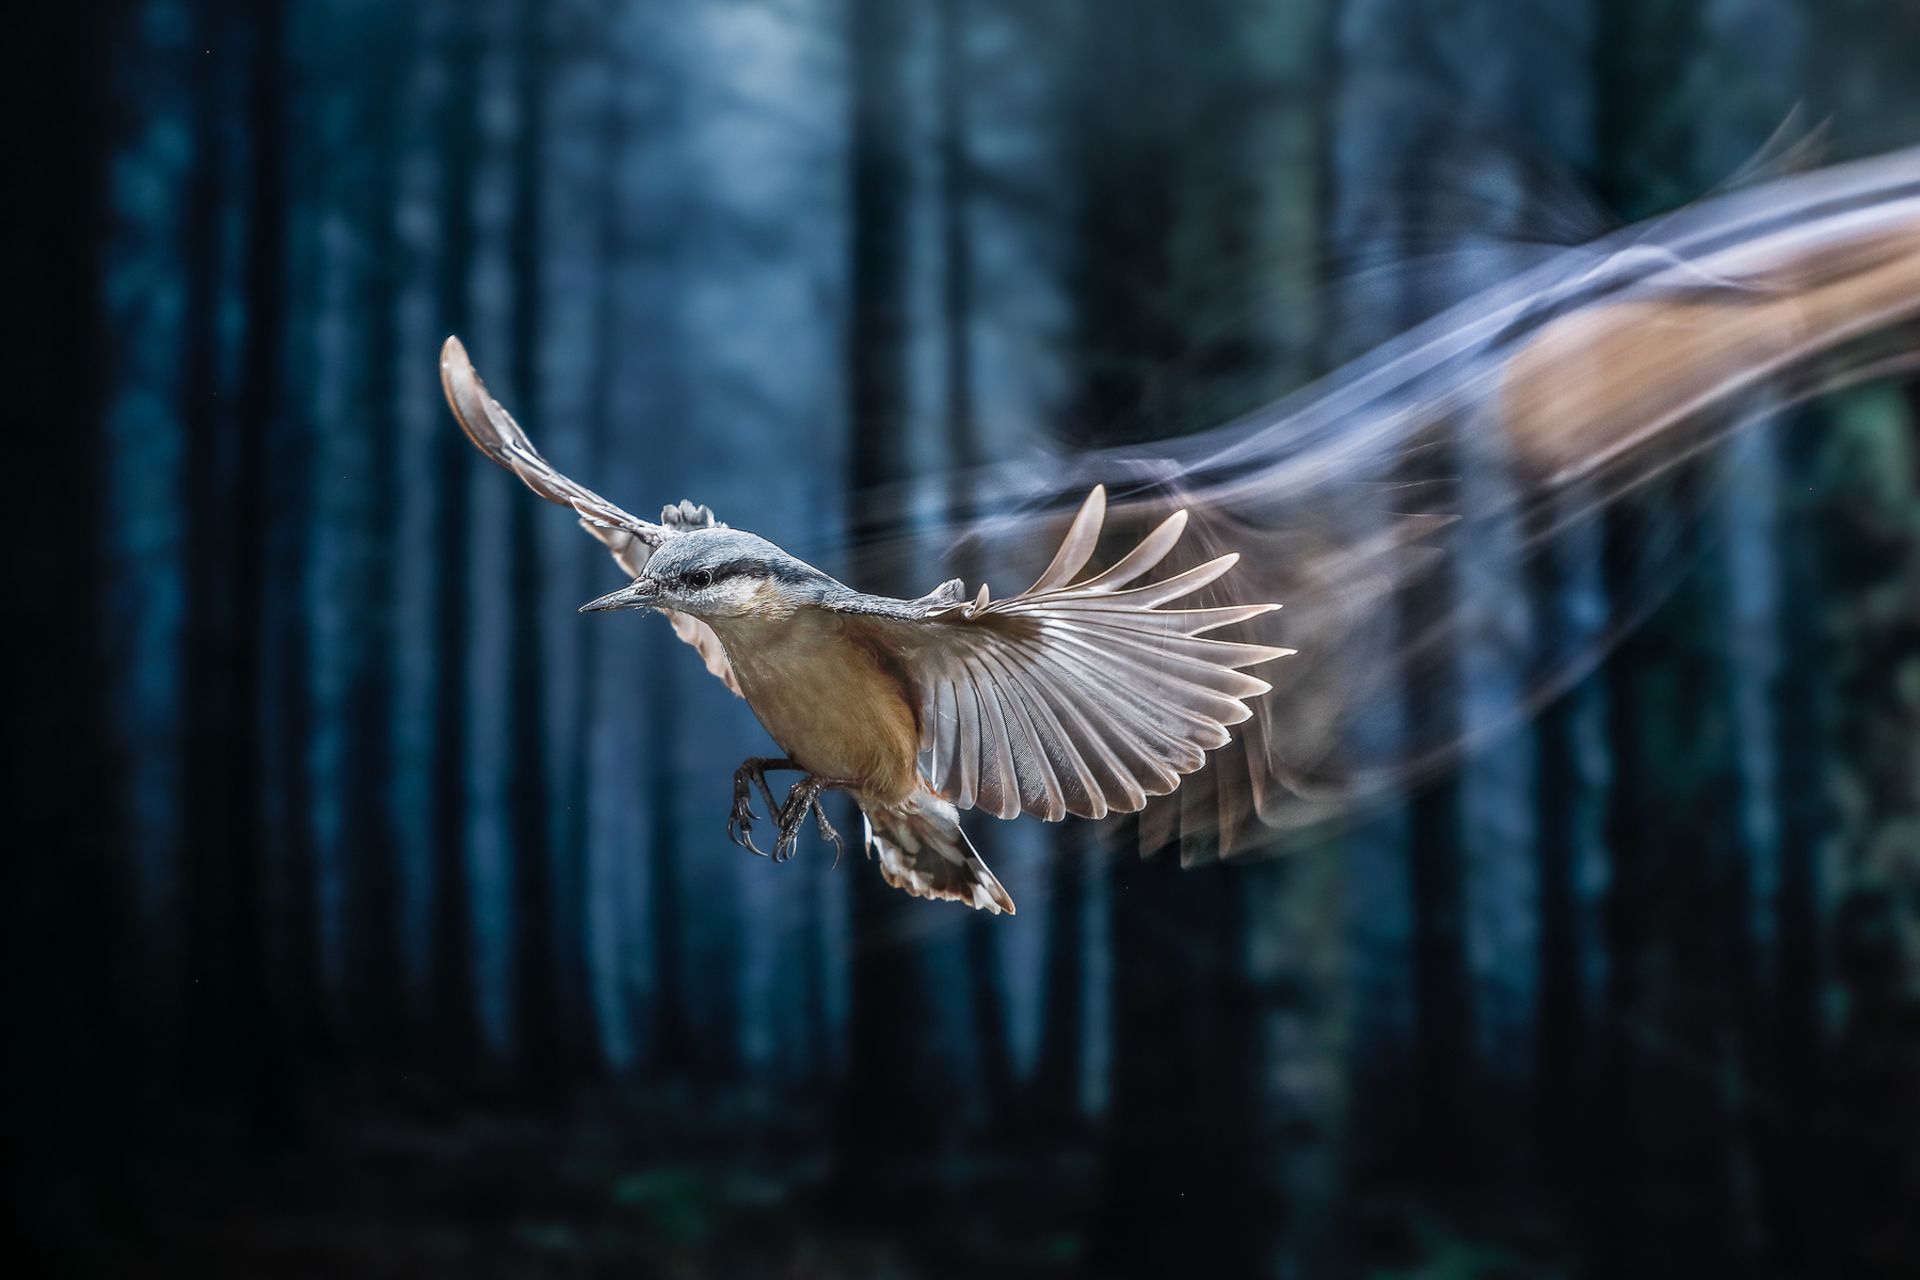 کمرکولی جنگلی در حال پرواز